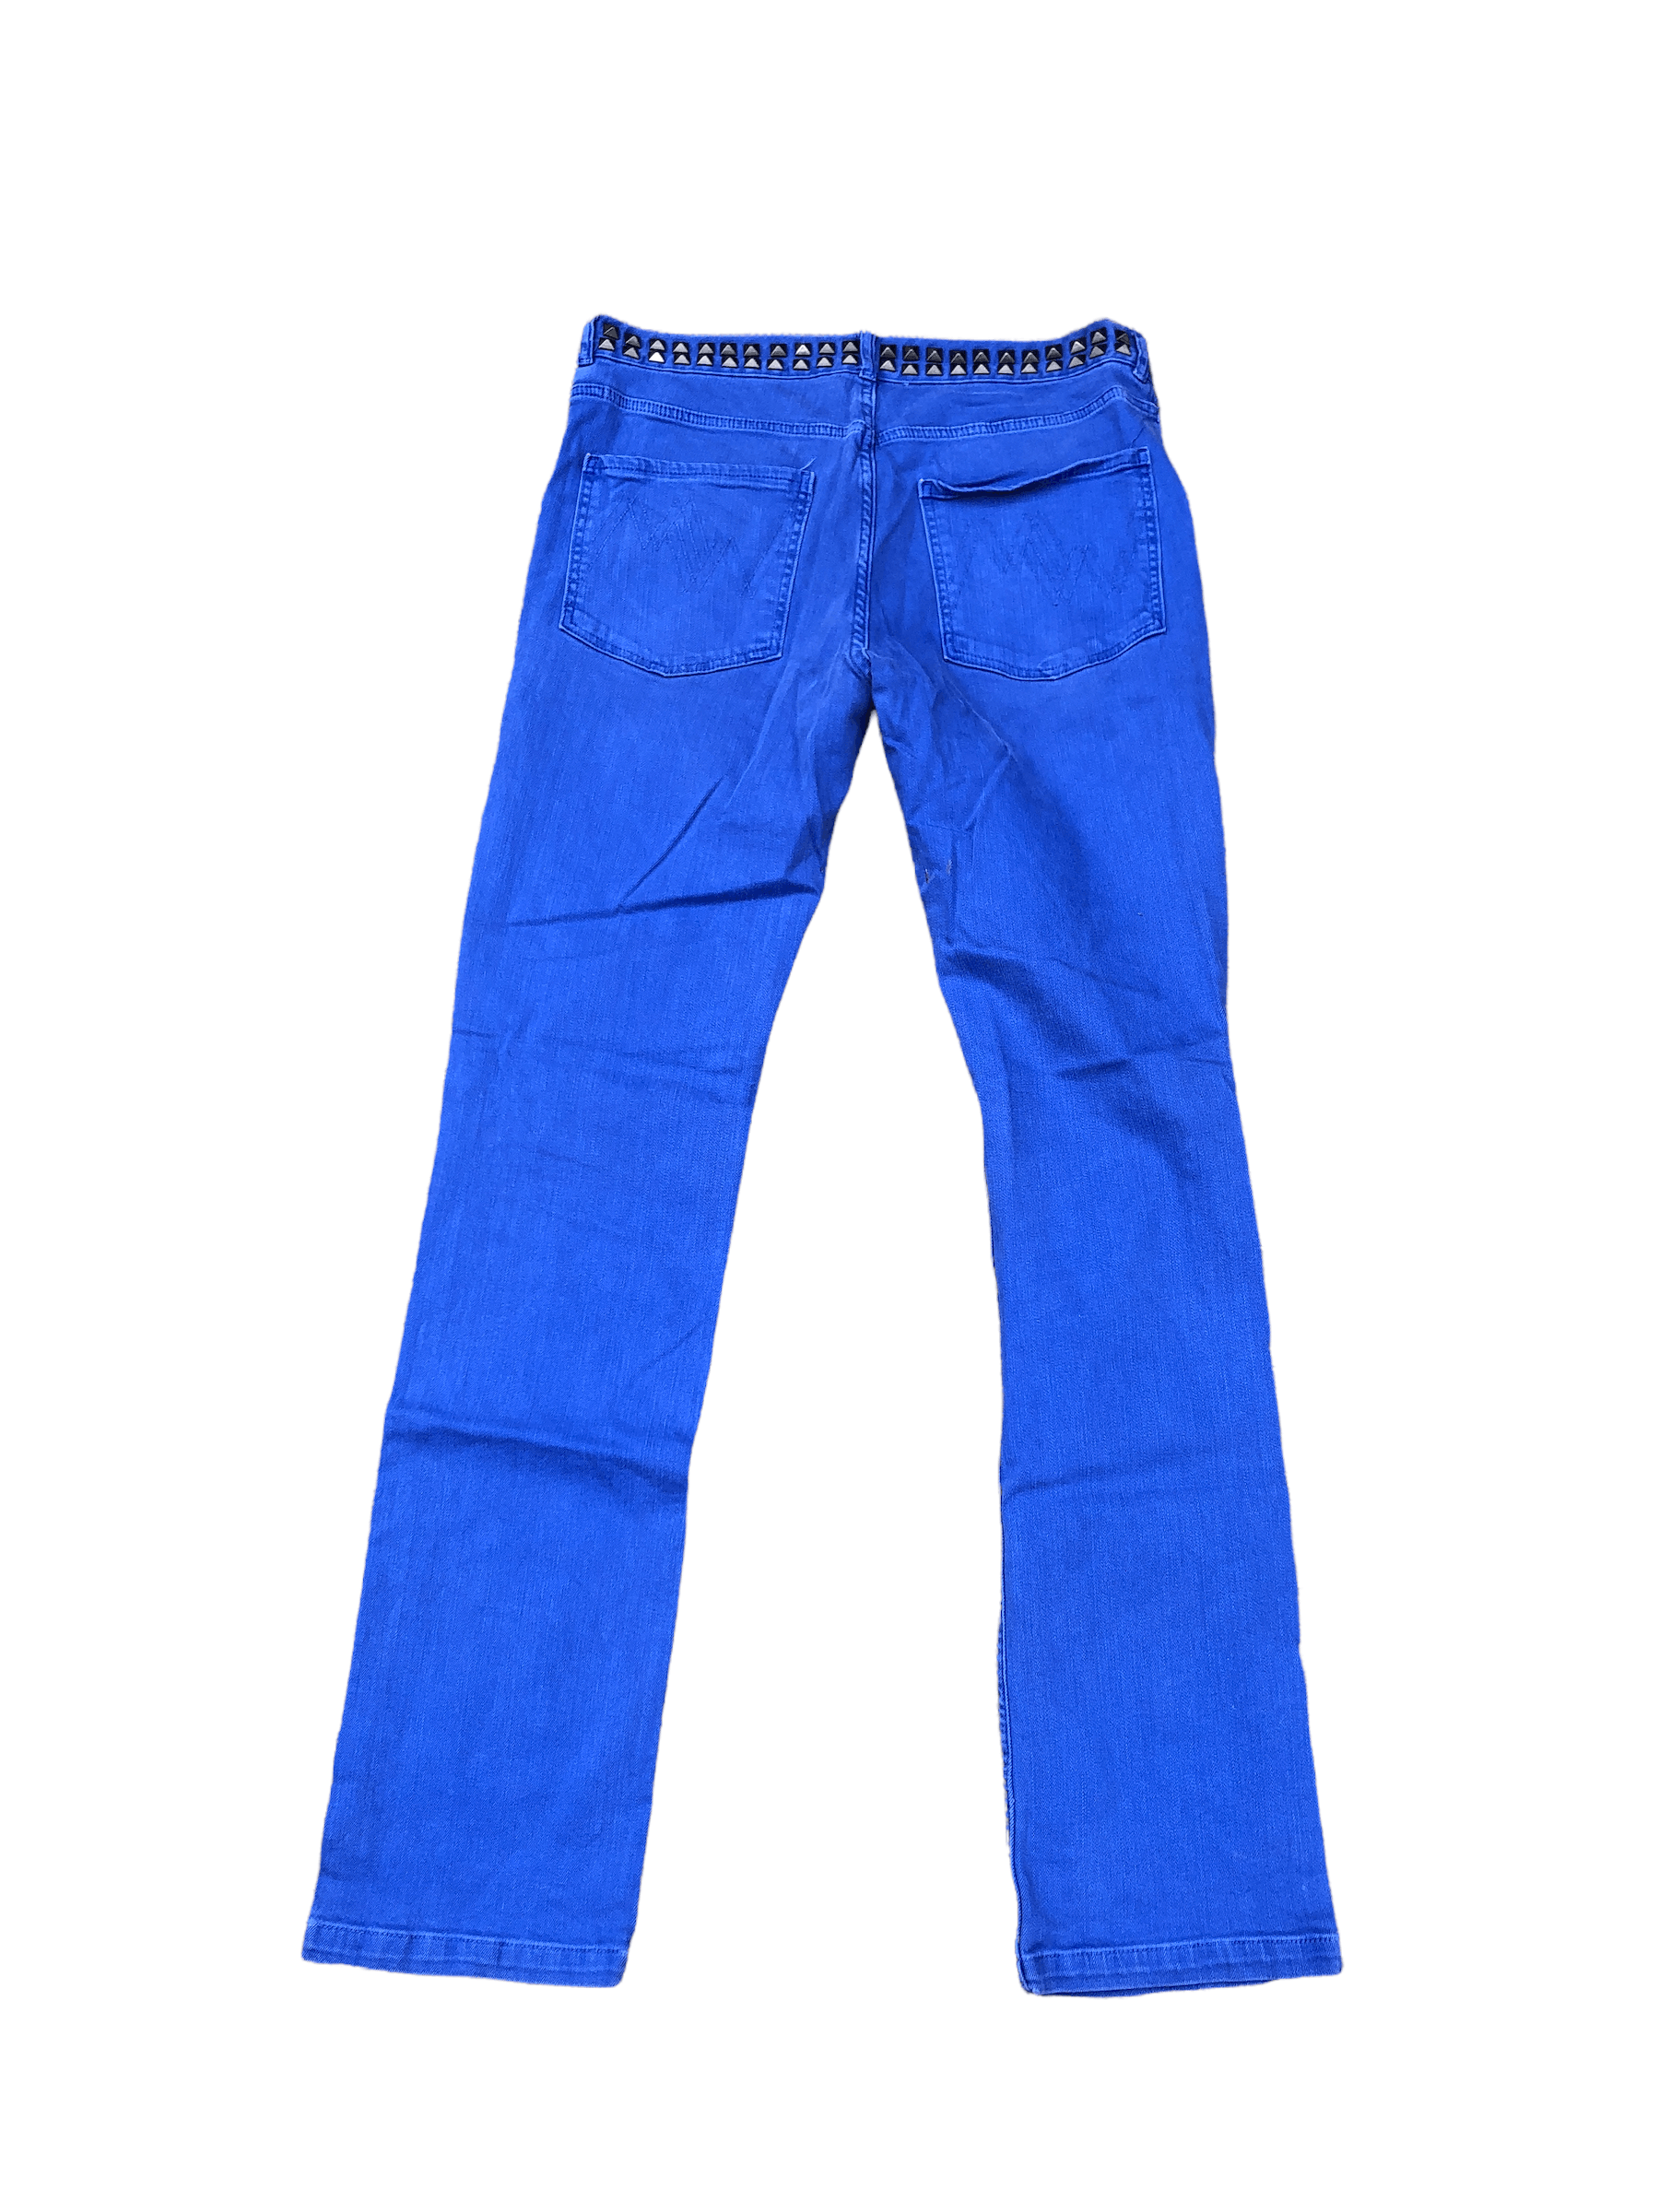 Vintage RARE Matthew Williamson X H&M Studded Jeans Size 34 Blue Size US 34 / EU 50 - 8 Thumbnail